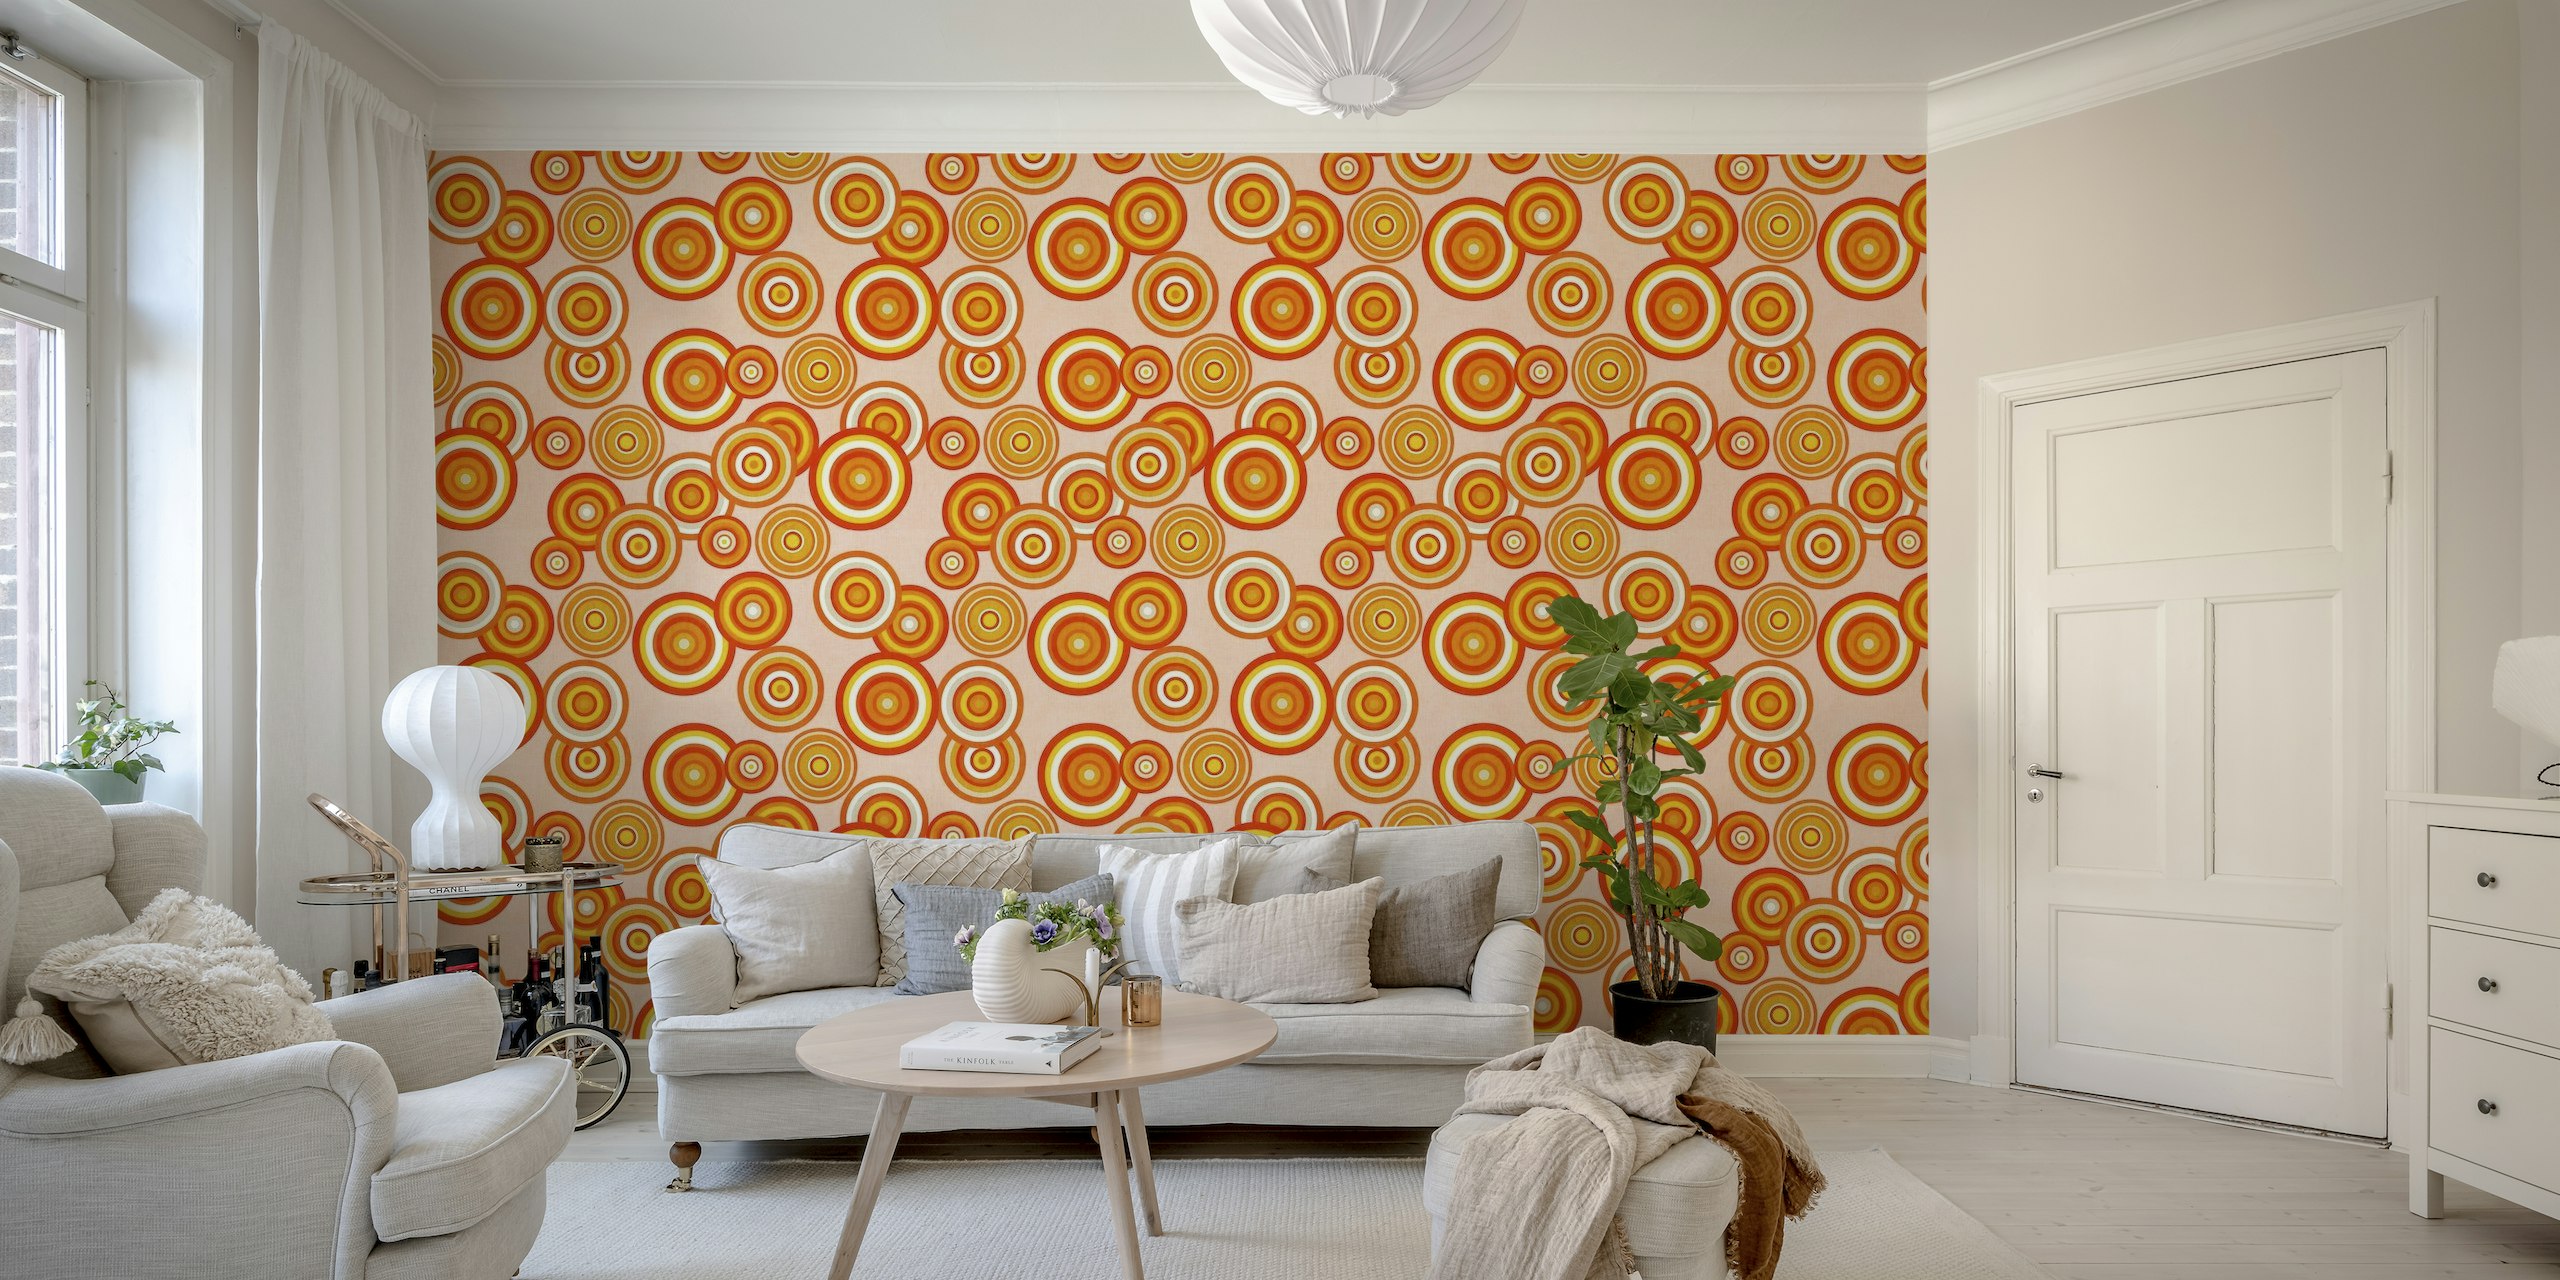 Radial suns geometry mid century wallpaper